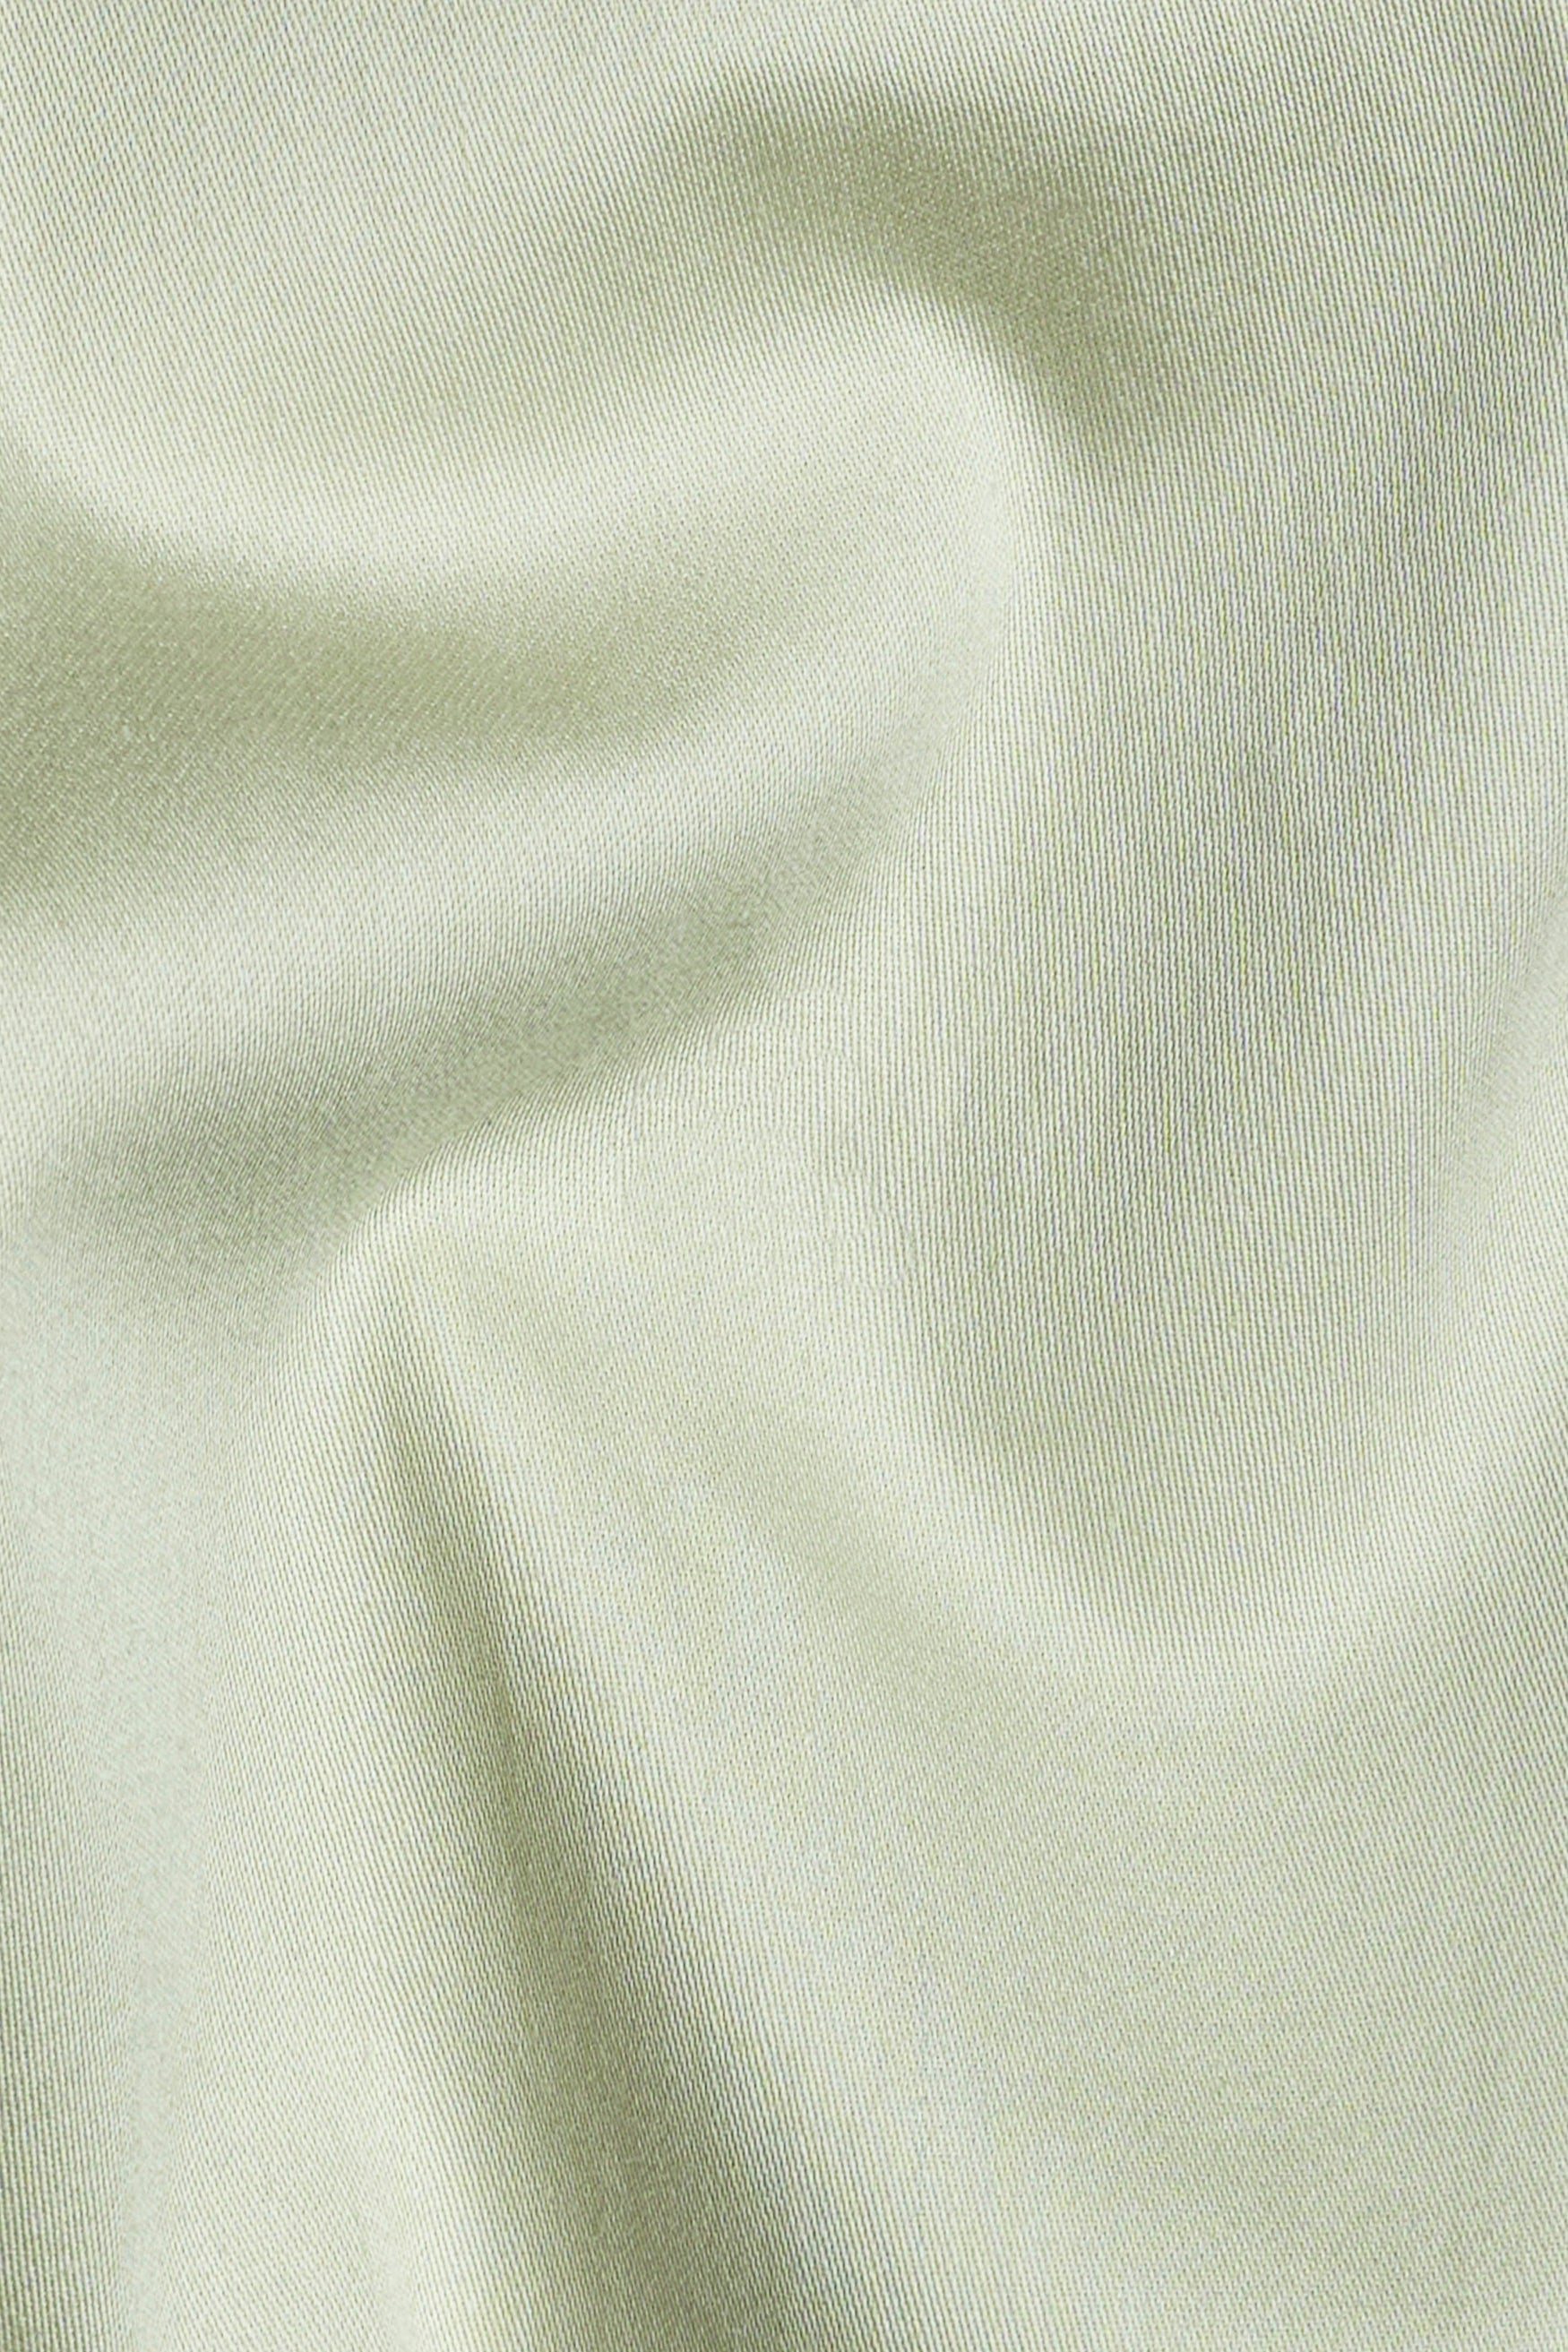 Coriander Green Subtle Sheen Super Soft Premium Cotton Kurta